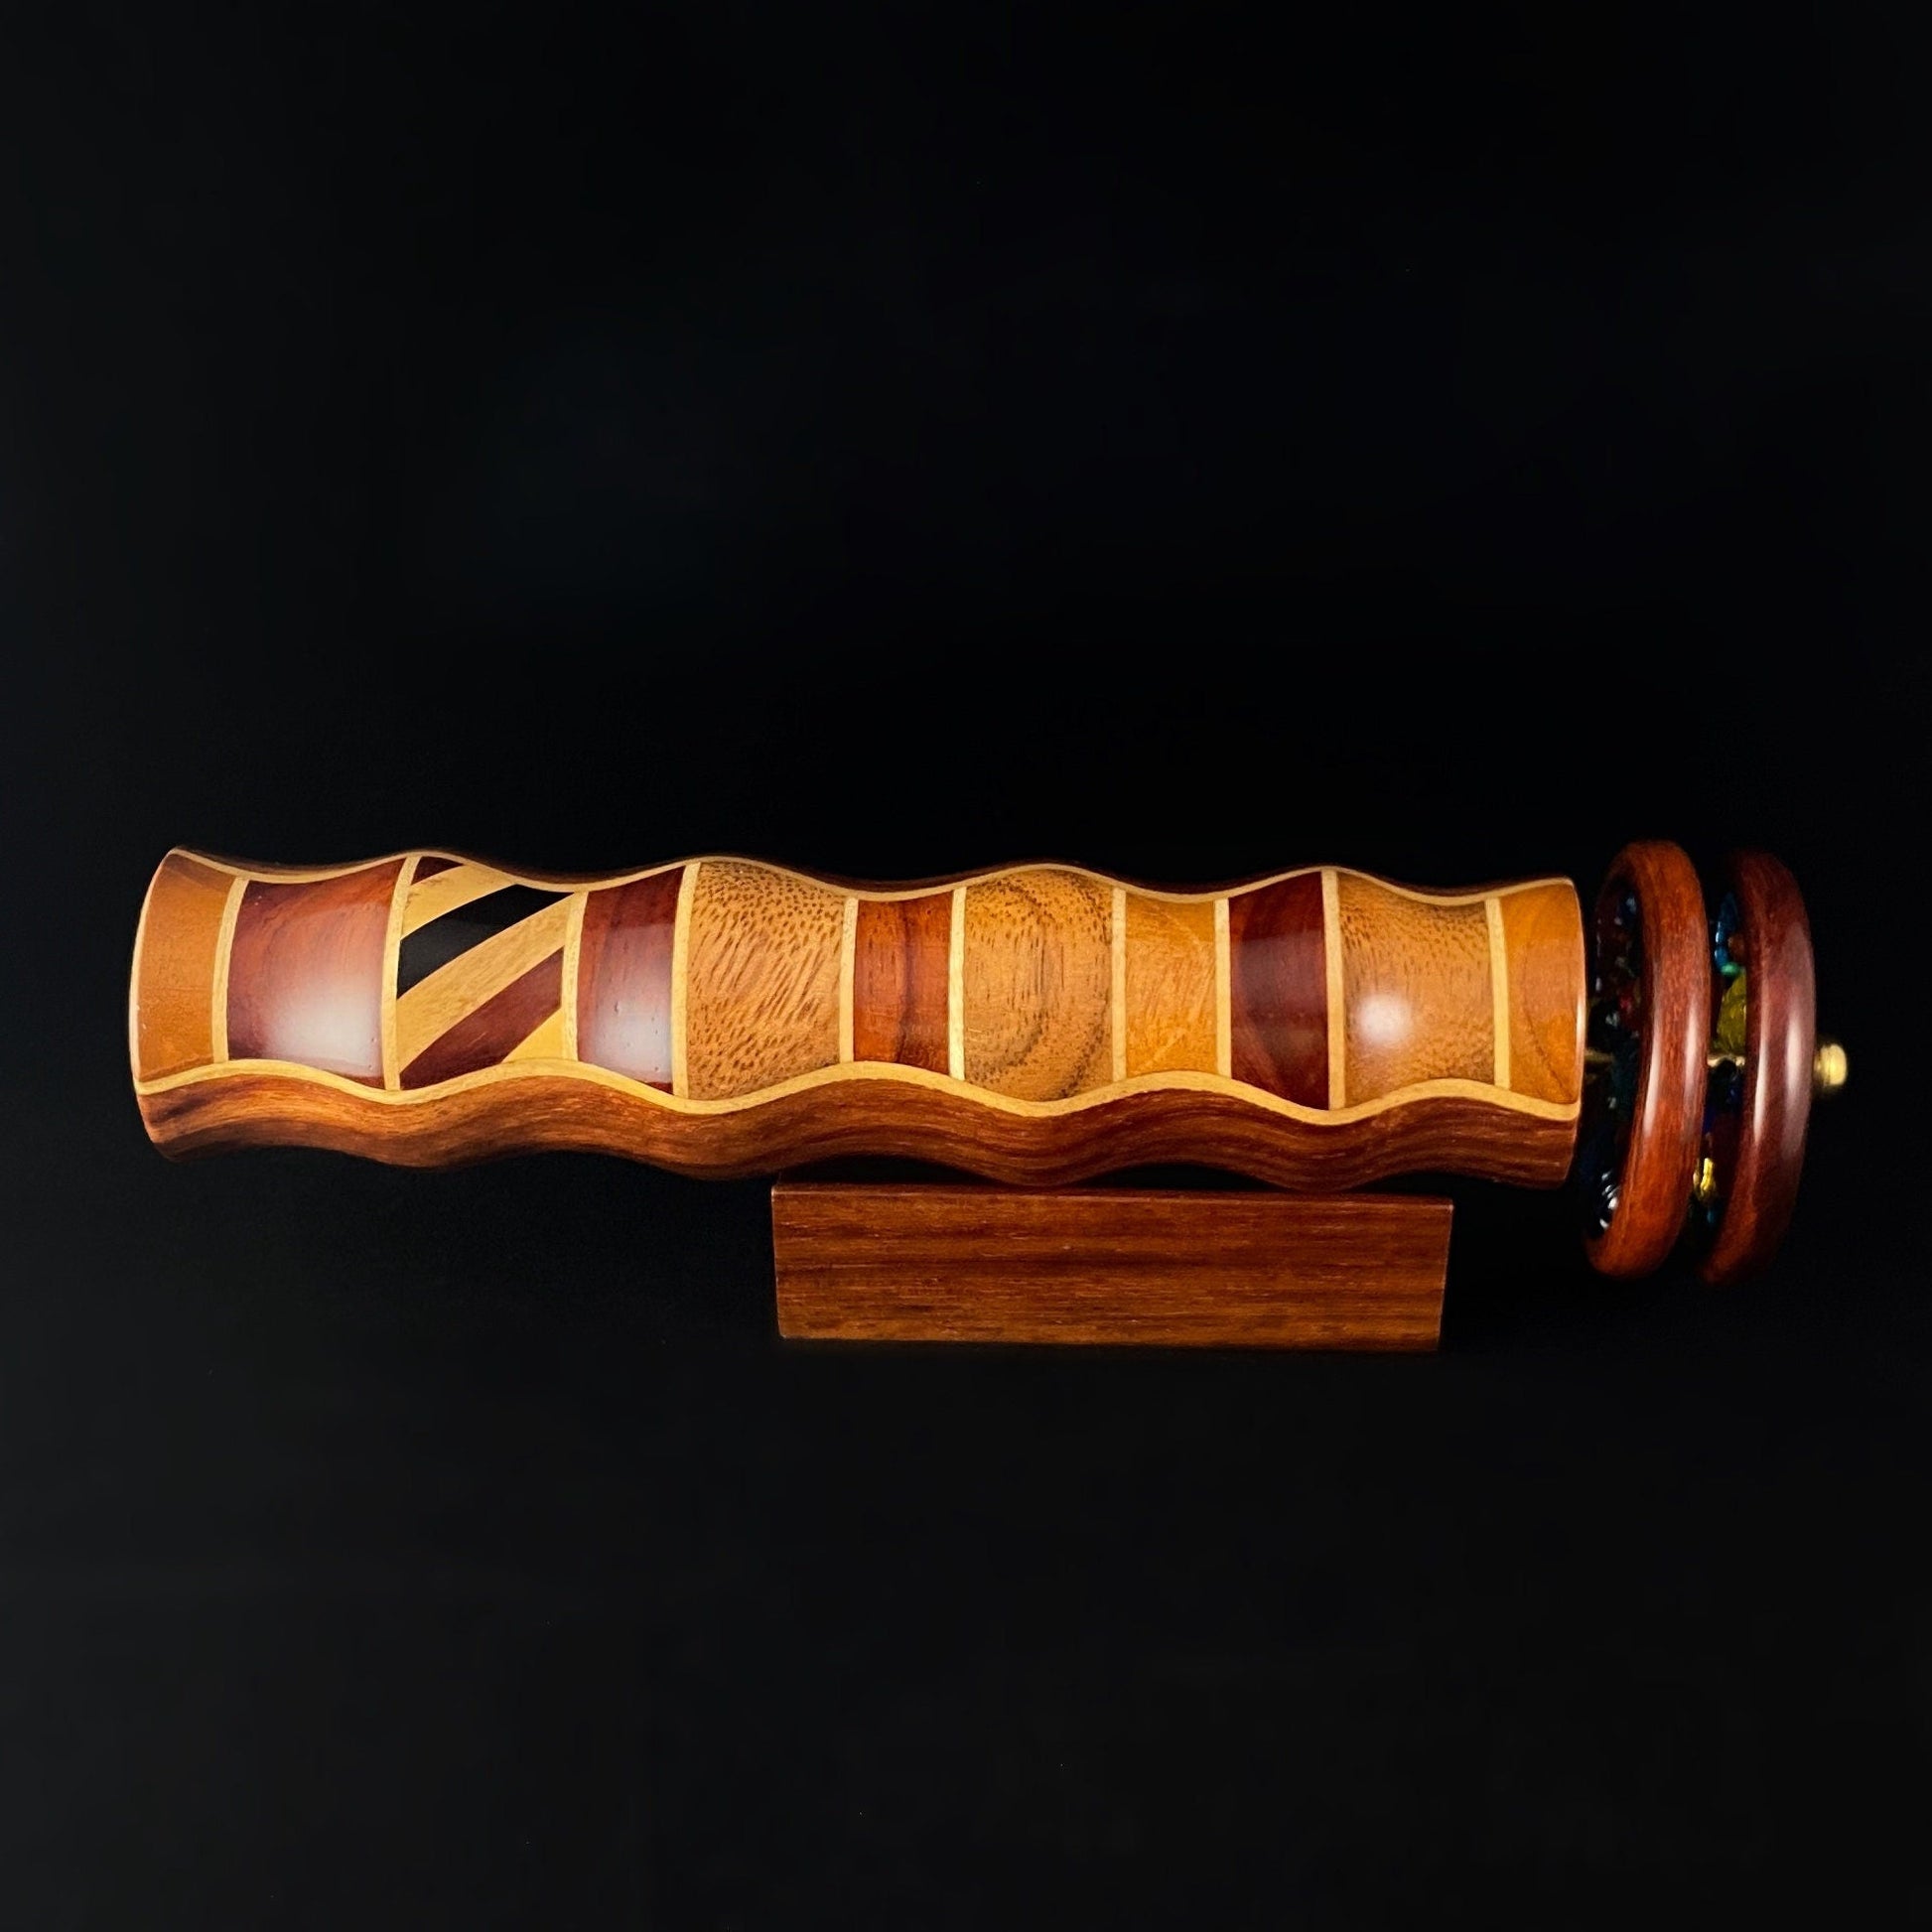 7 Inch Handmade Wooden Kaleidoscope with Padauk Marquetry